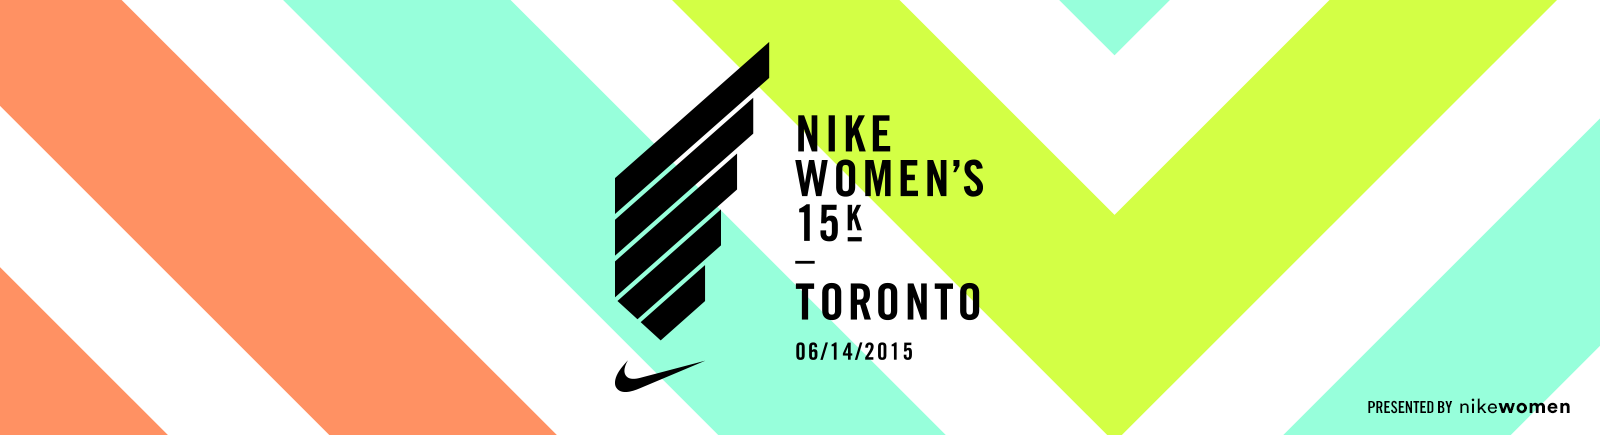 Nike Women's 15K Toronto | Nike